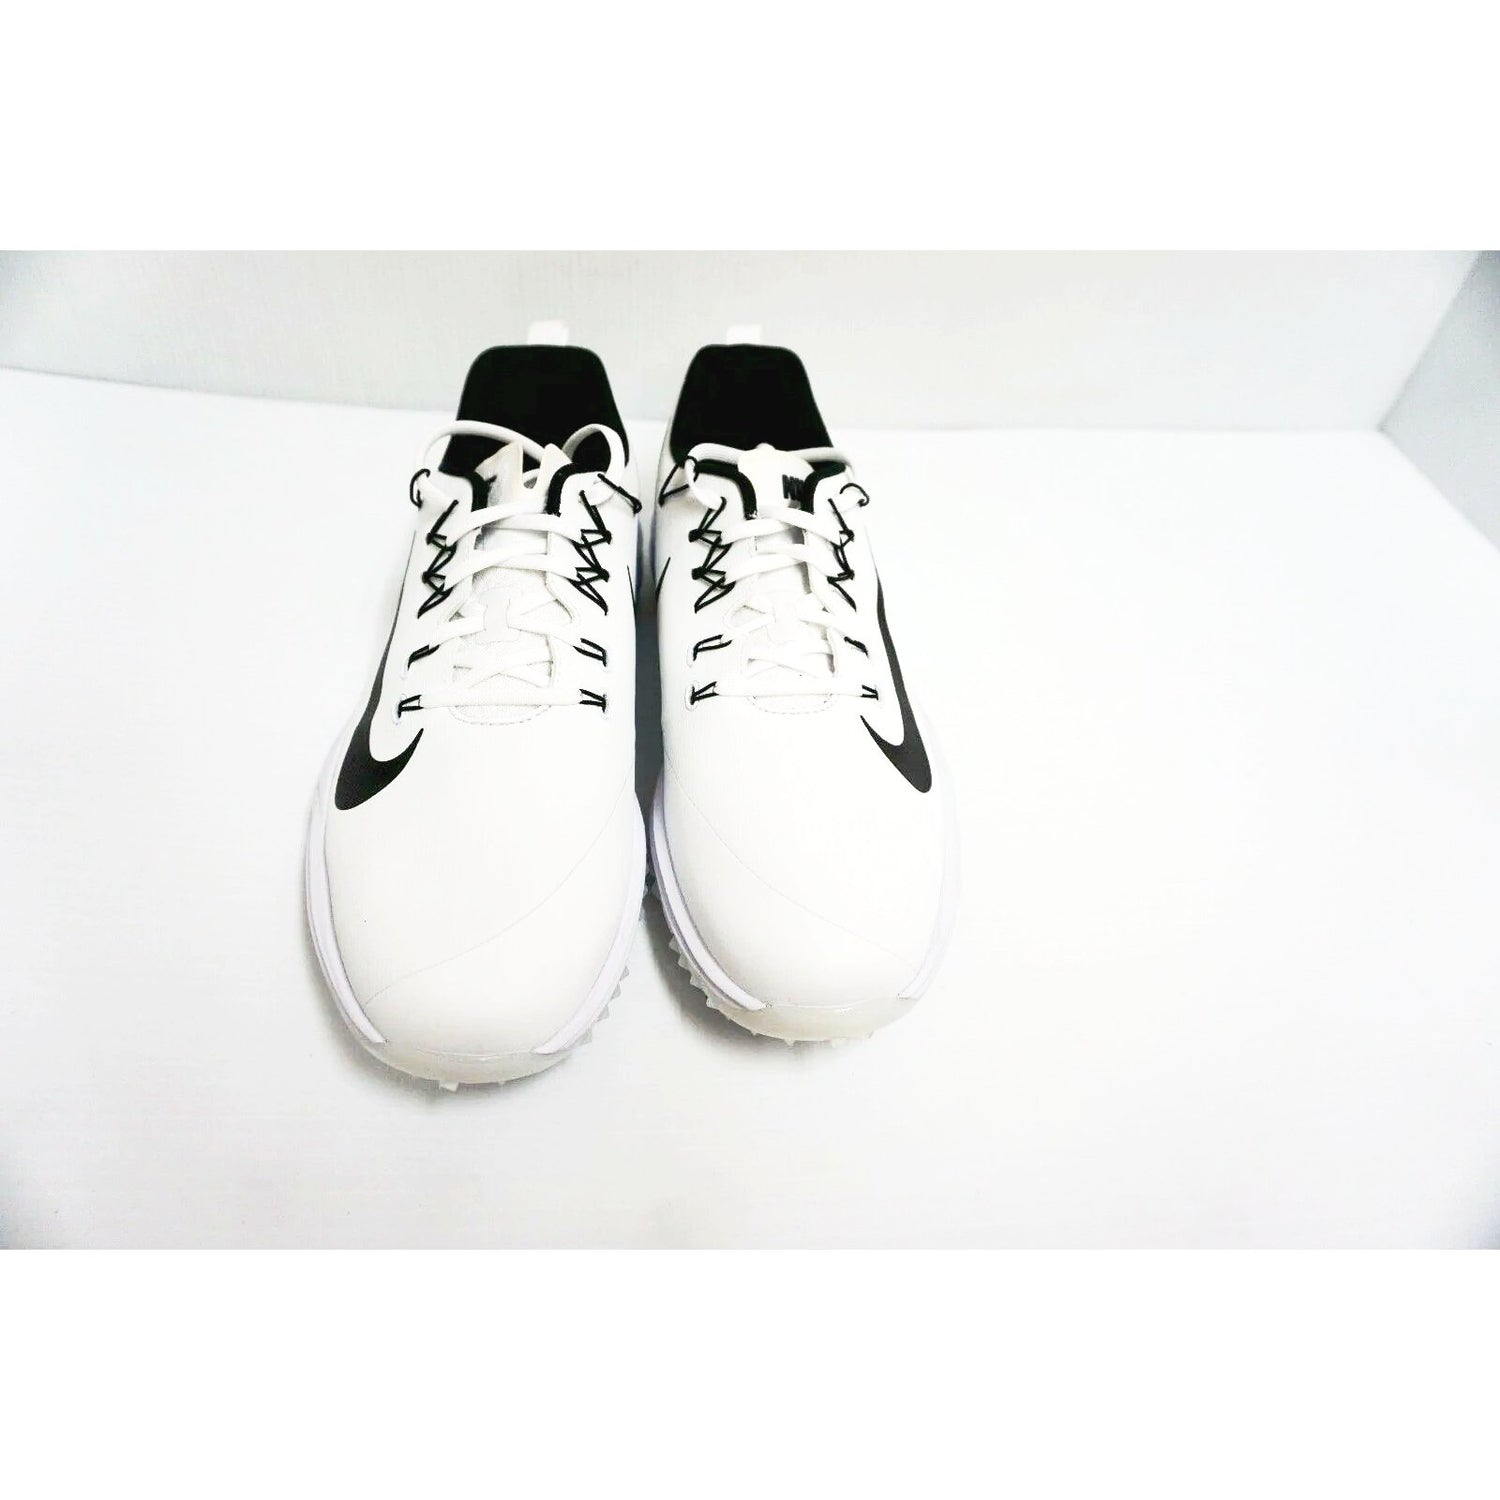 Nike mens shoes golf lunar command 2 white black size 12 us men